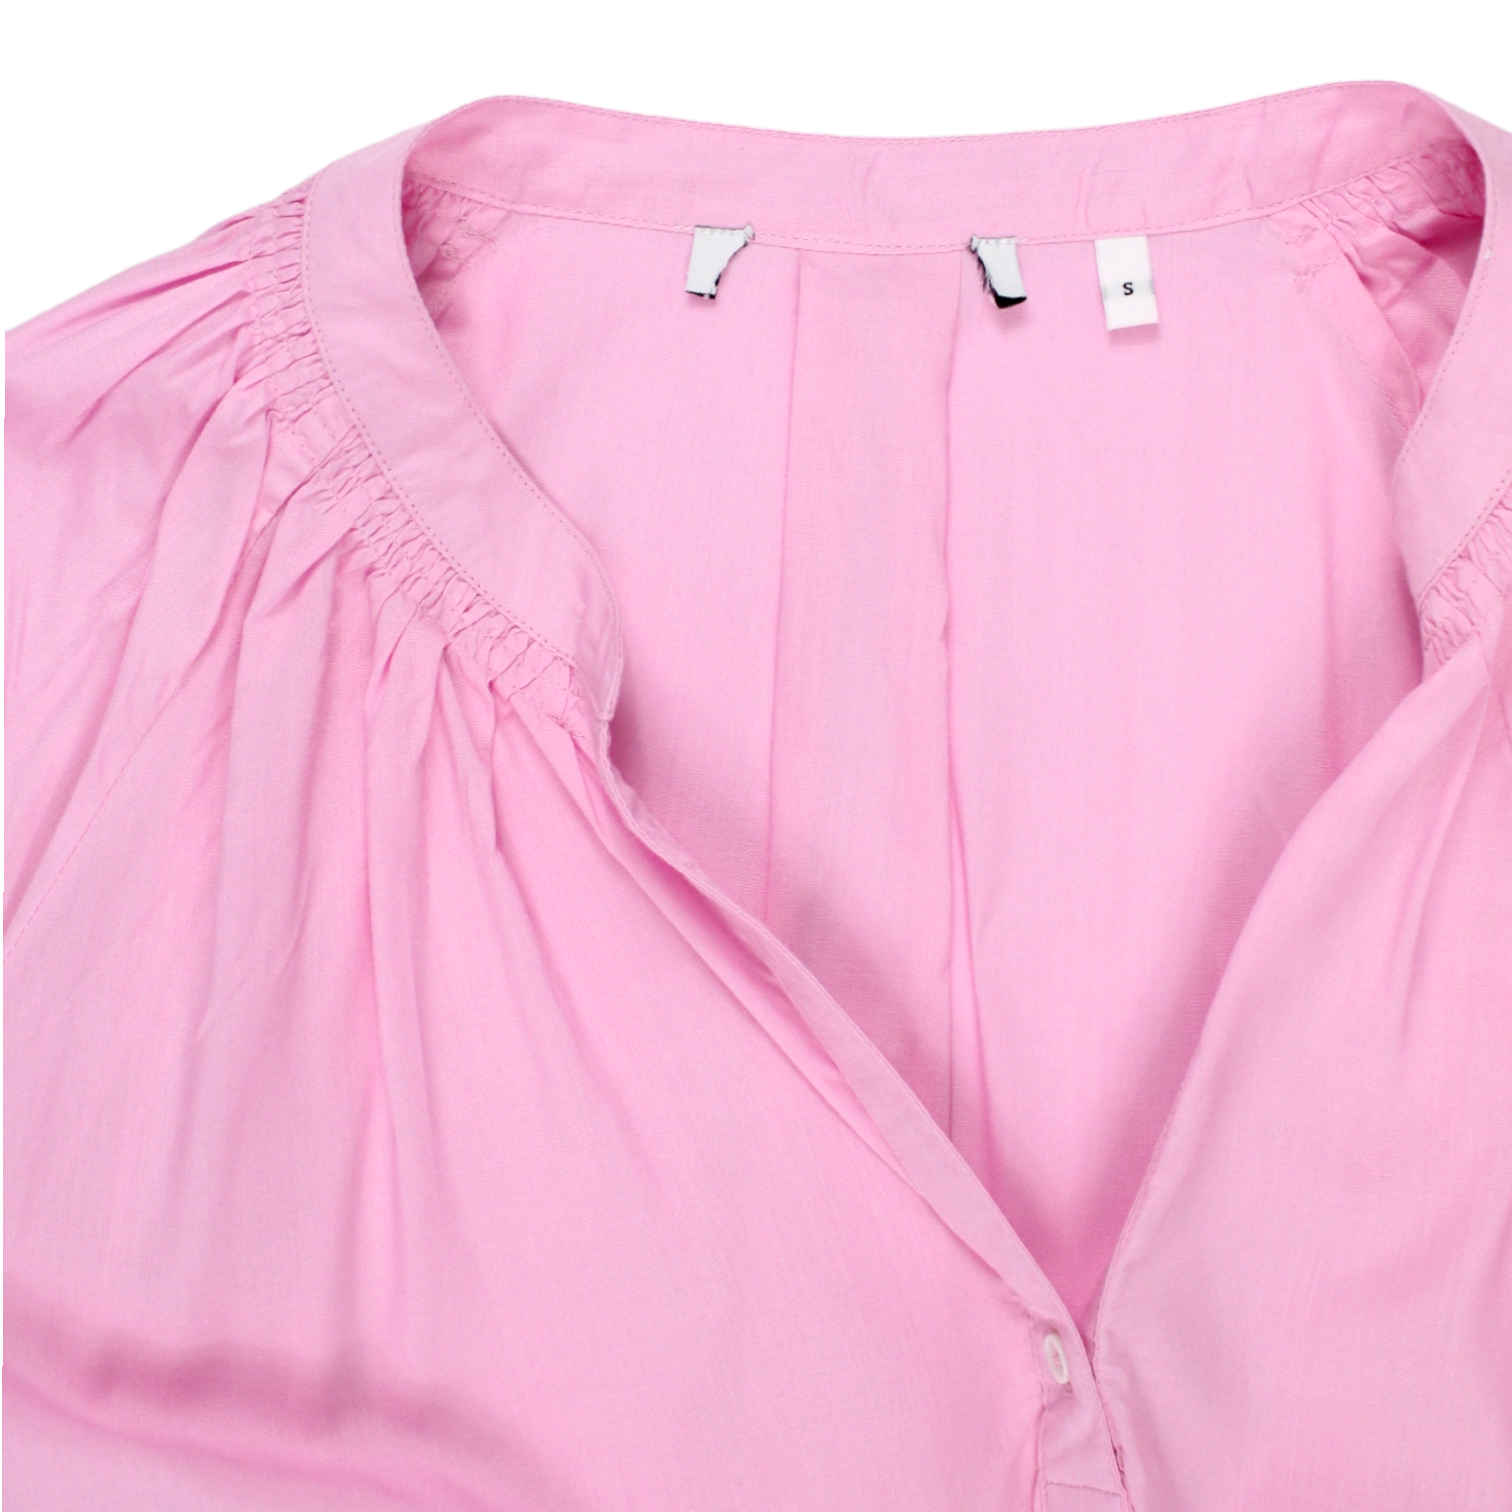 NRBY Pink Gathered Neckline Shirt - Sample